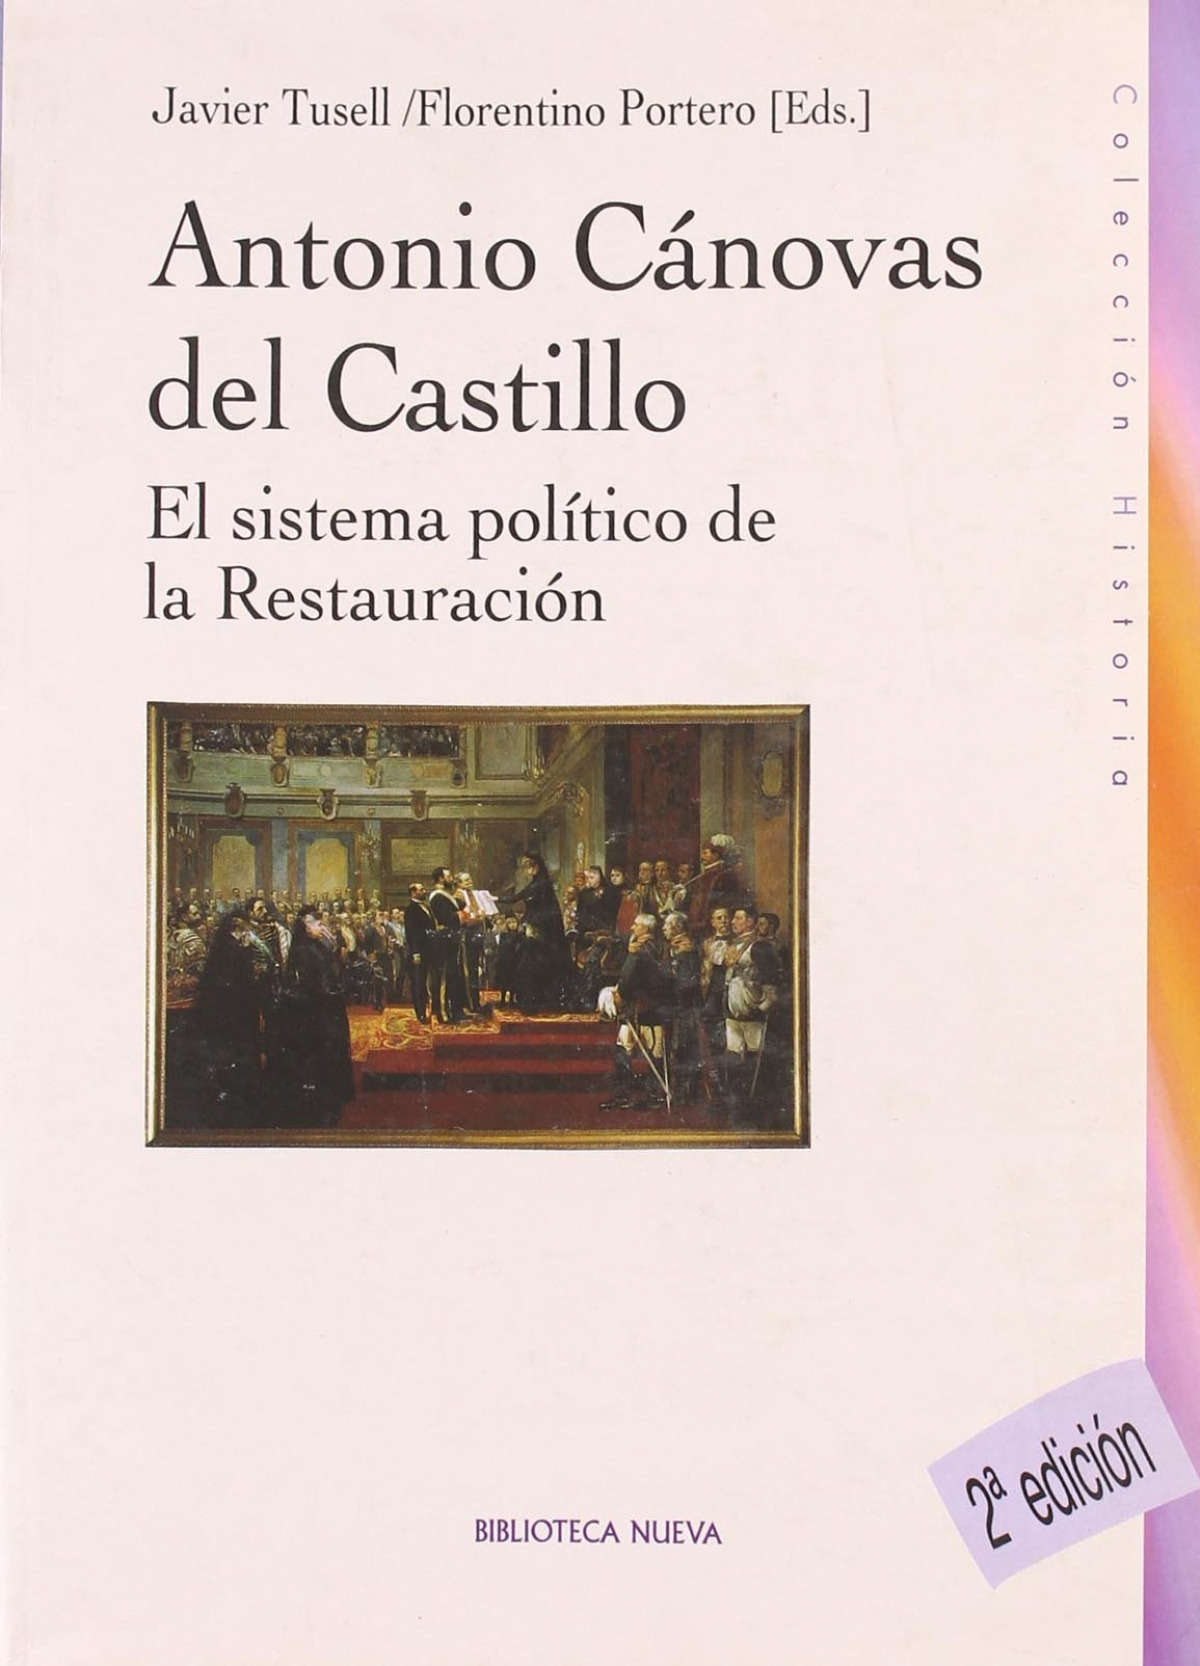 Antonio canovas del castillo - Vv.Aa.